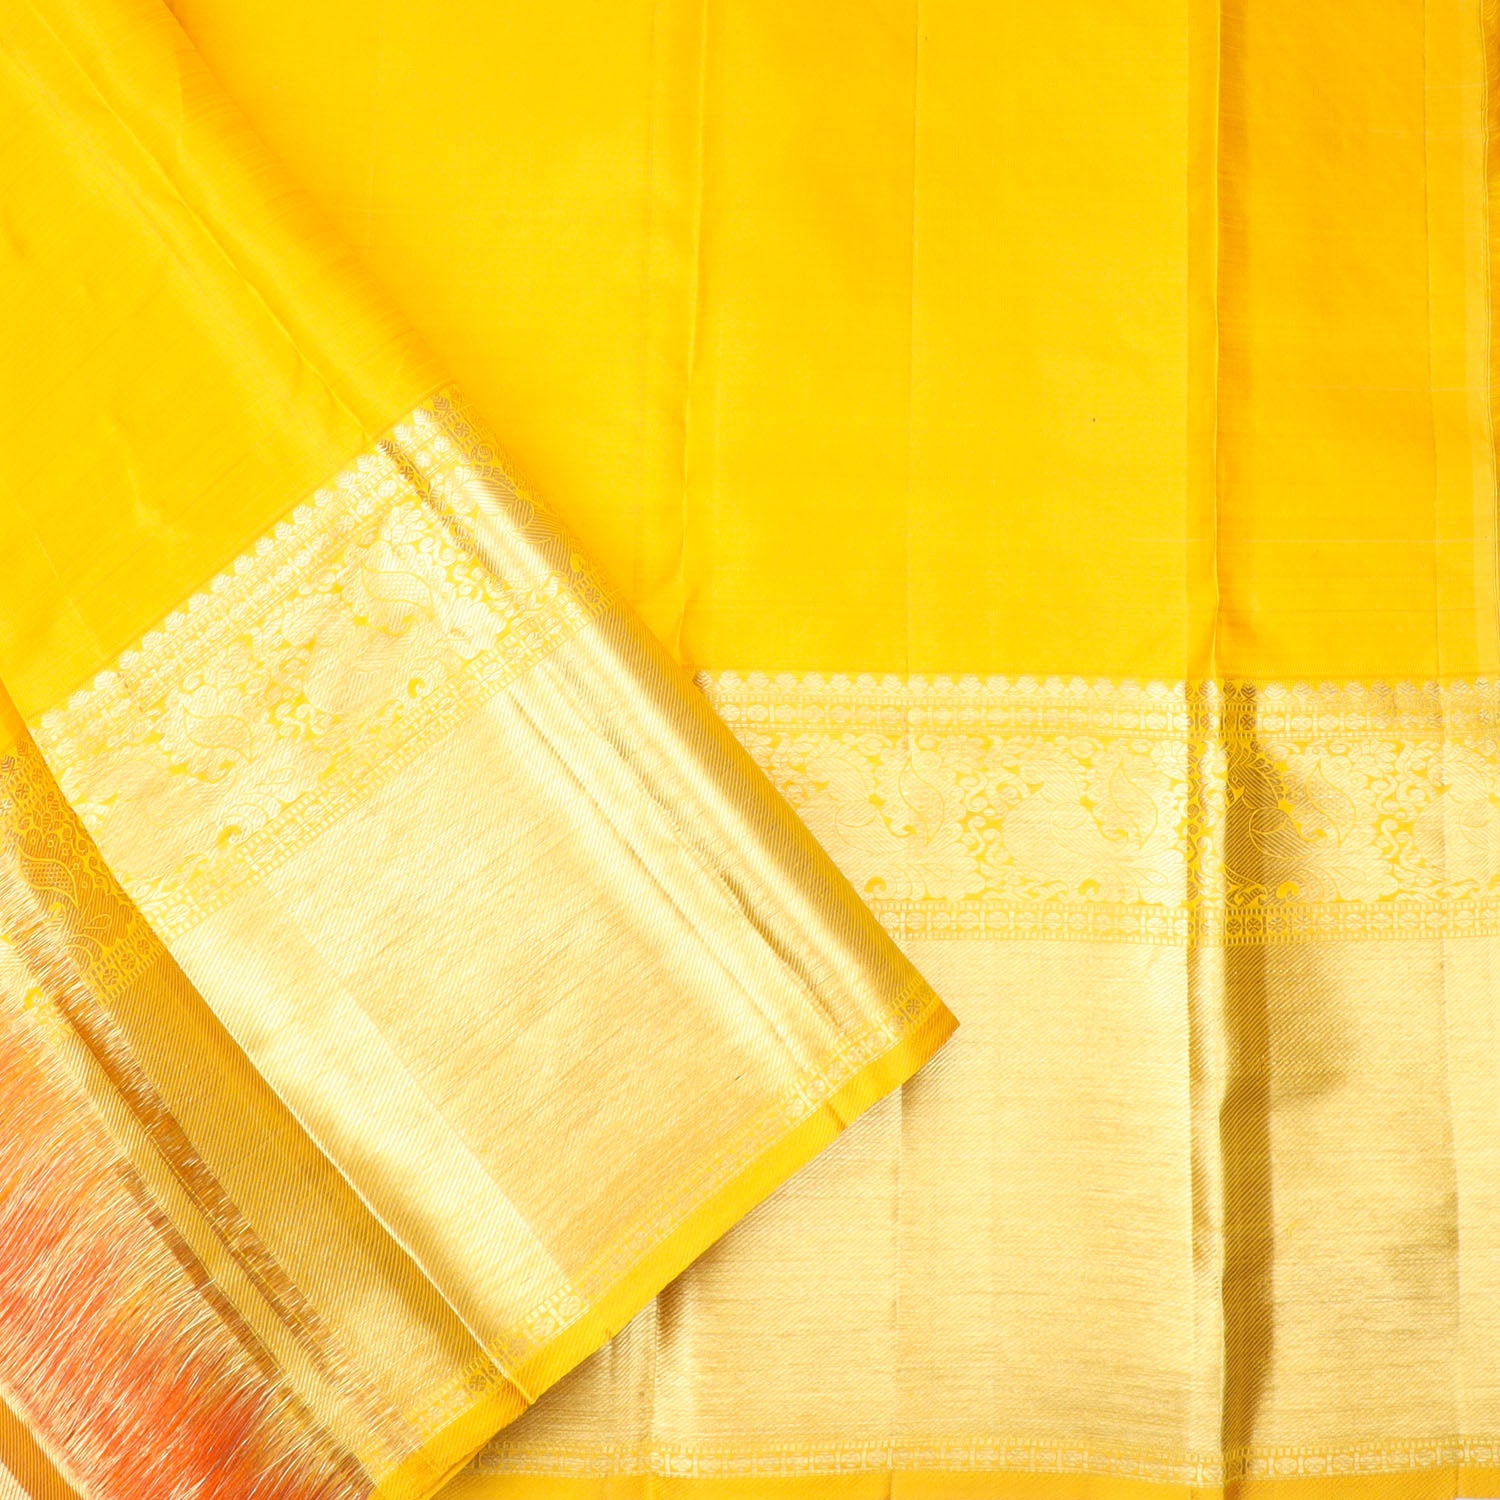 Vibrant Orange Kanjivaram Silk Saree With Floral Pattern